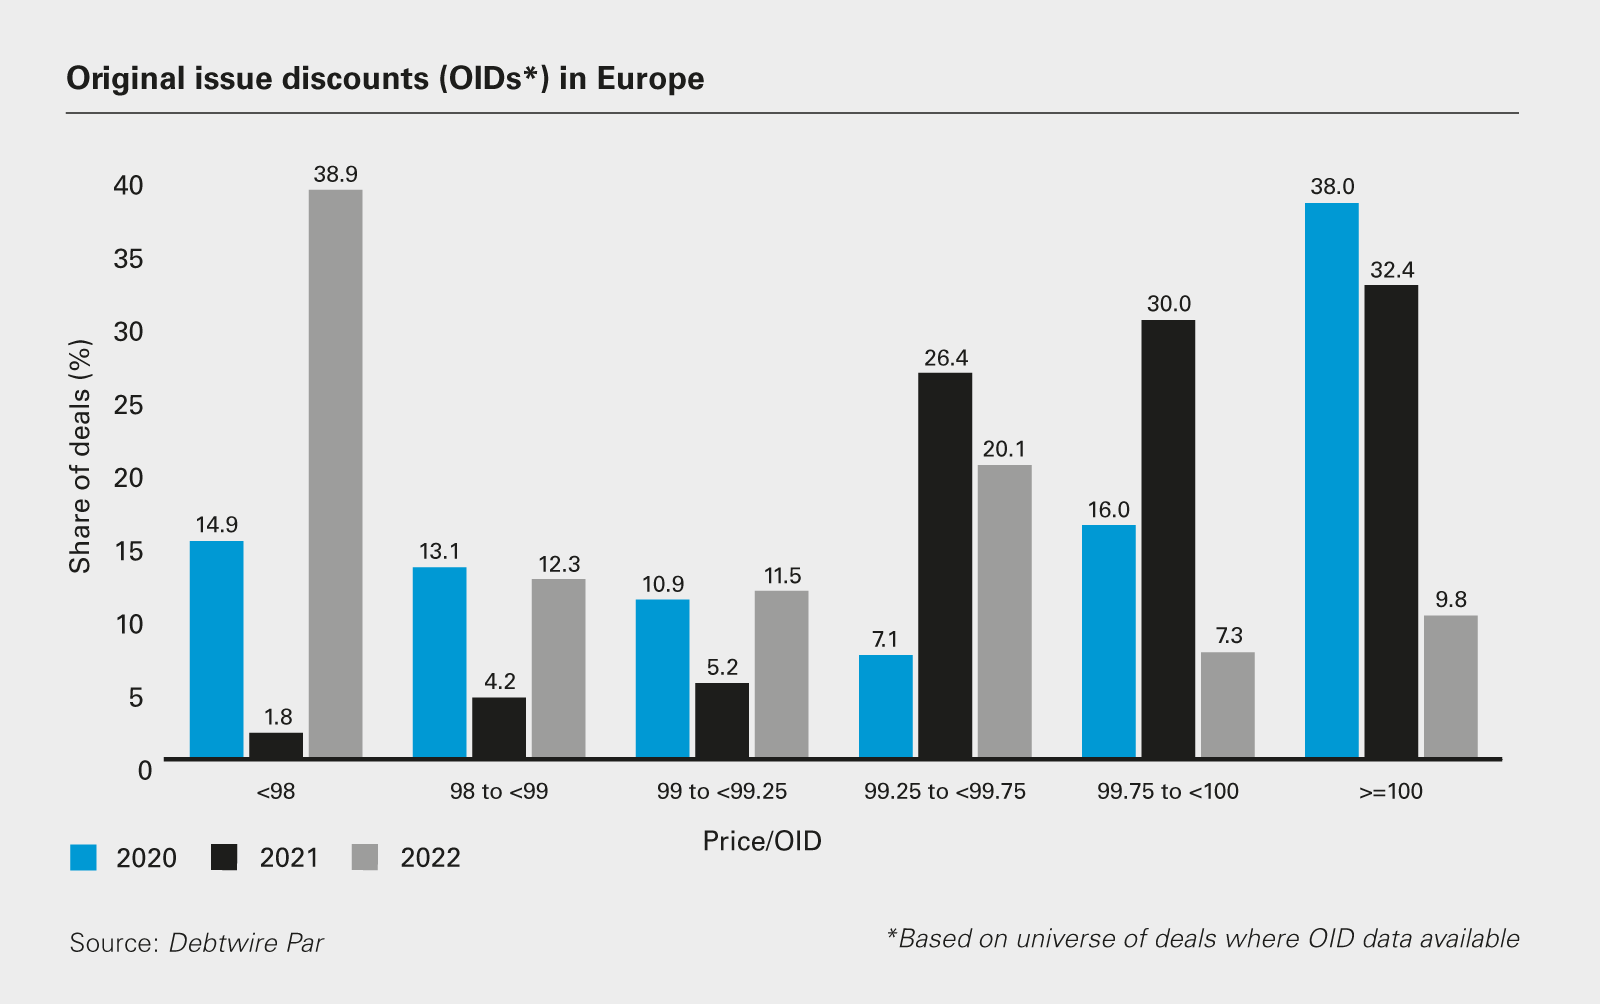 Original issue discounts (OIDs) in Europe